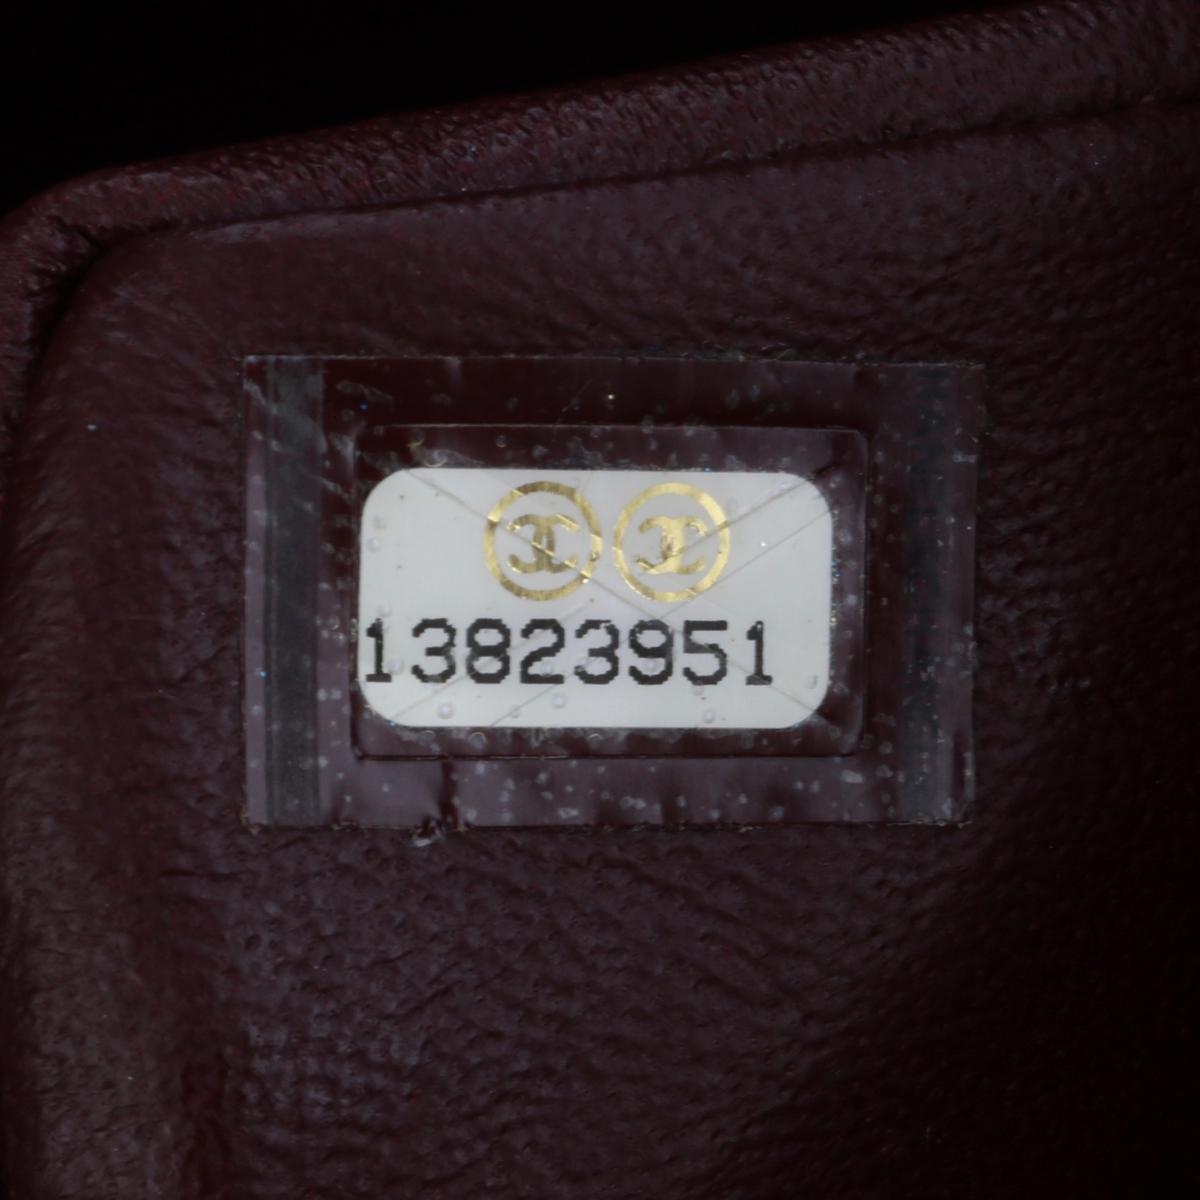 CHANEL Single Flap Jumbo Bag in Black Lambskin with Silver-Tone Hardware 2010 For Sale 13